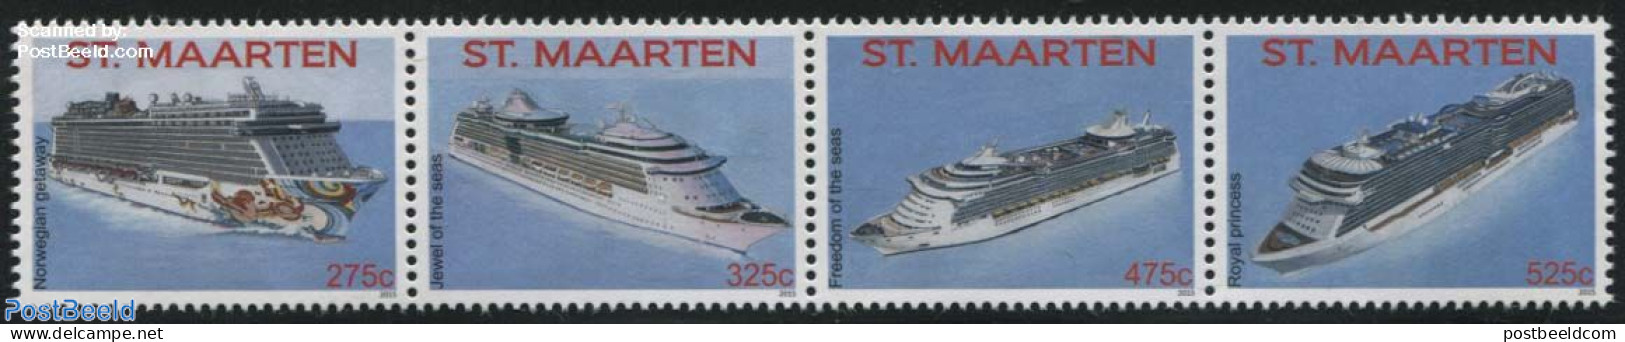 St. Maarten 2015 Cruise Ships 4v [:::], Mint NH, Transport - Ships And Boats - Boten